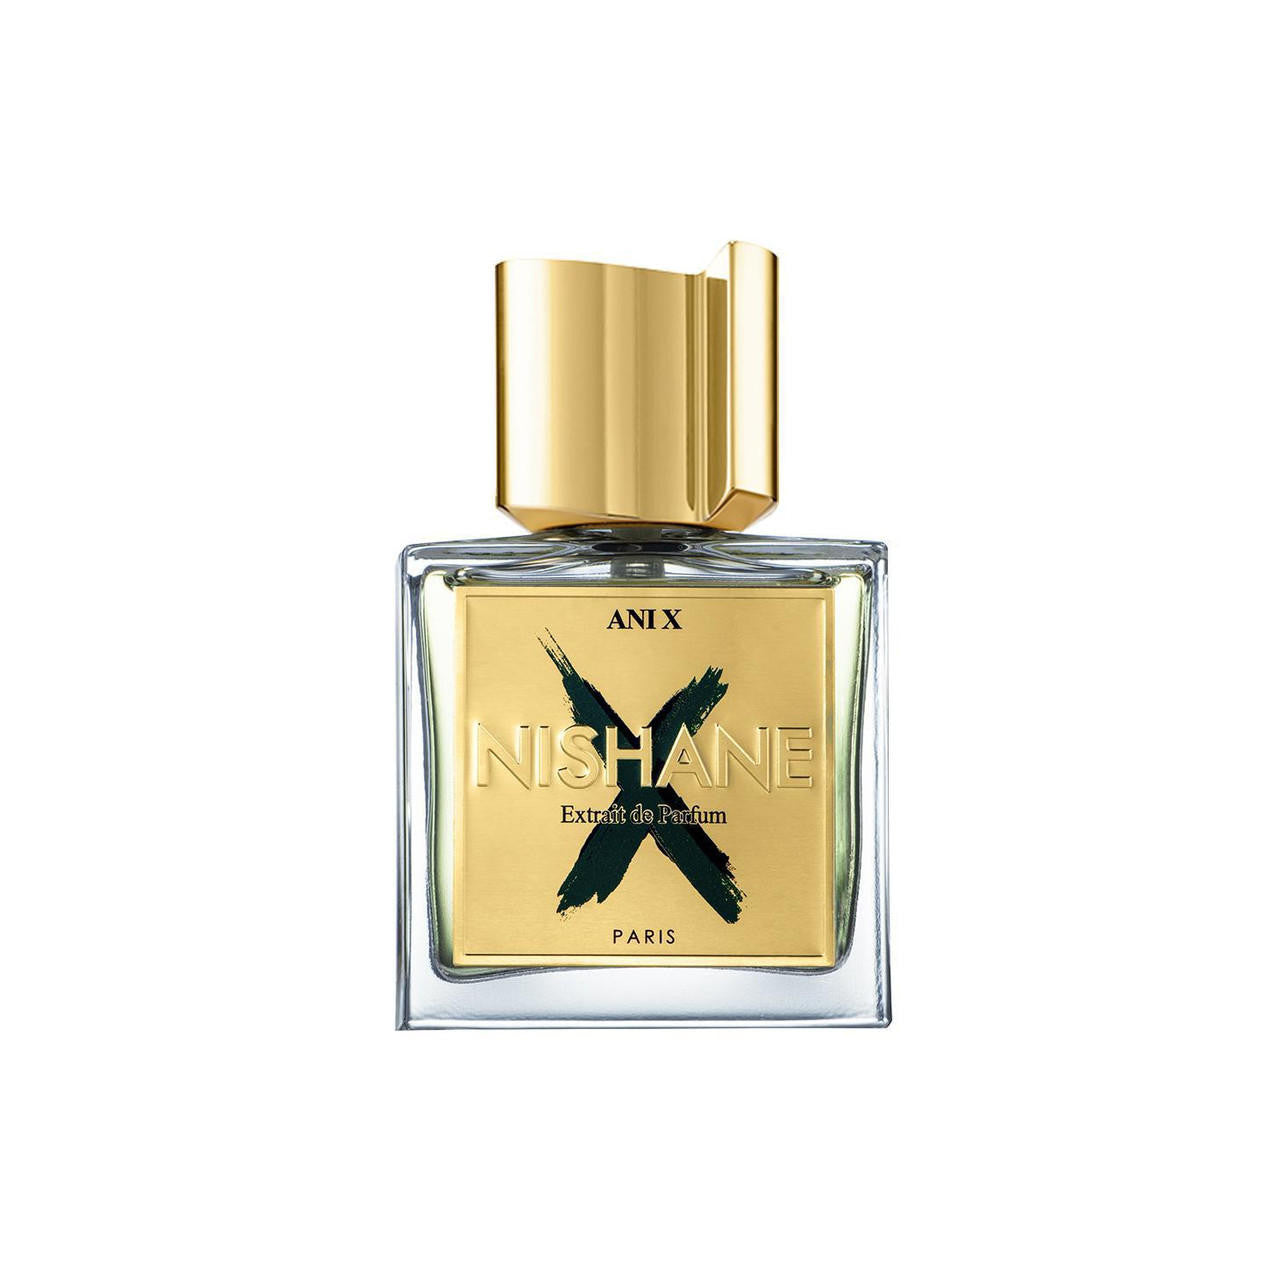  Nishane ANI X Extrait de Parfum 